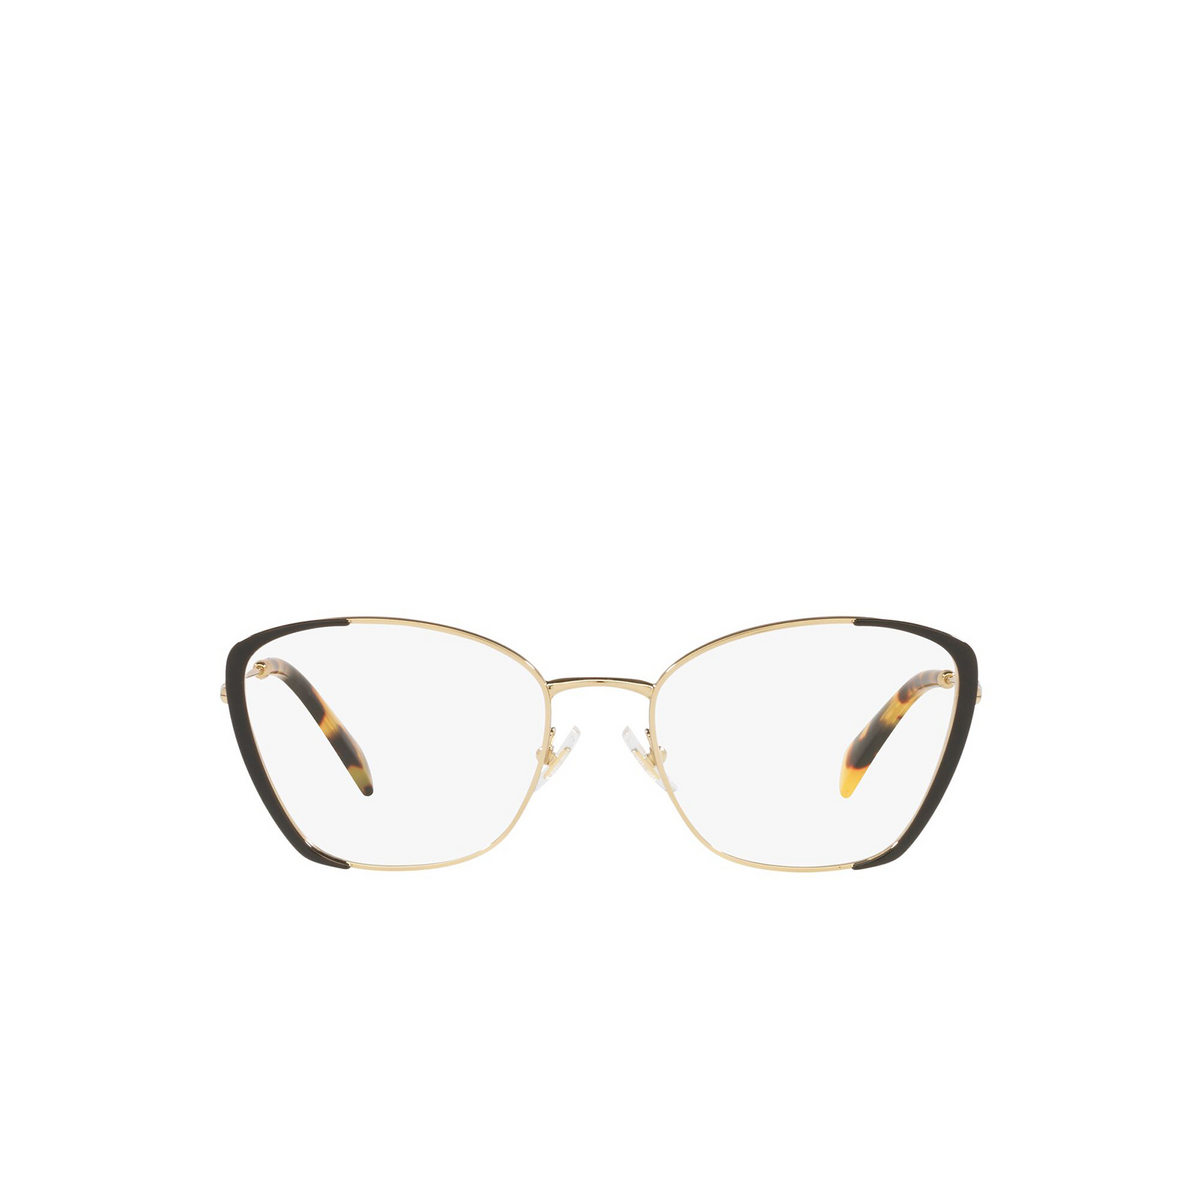 Miu Miu® Butterfly Eyeglasses: MU 51UV color Black AAV1O1 - 1/3.